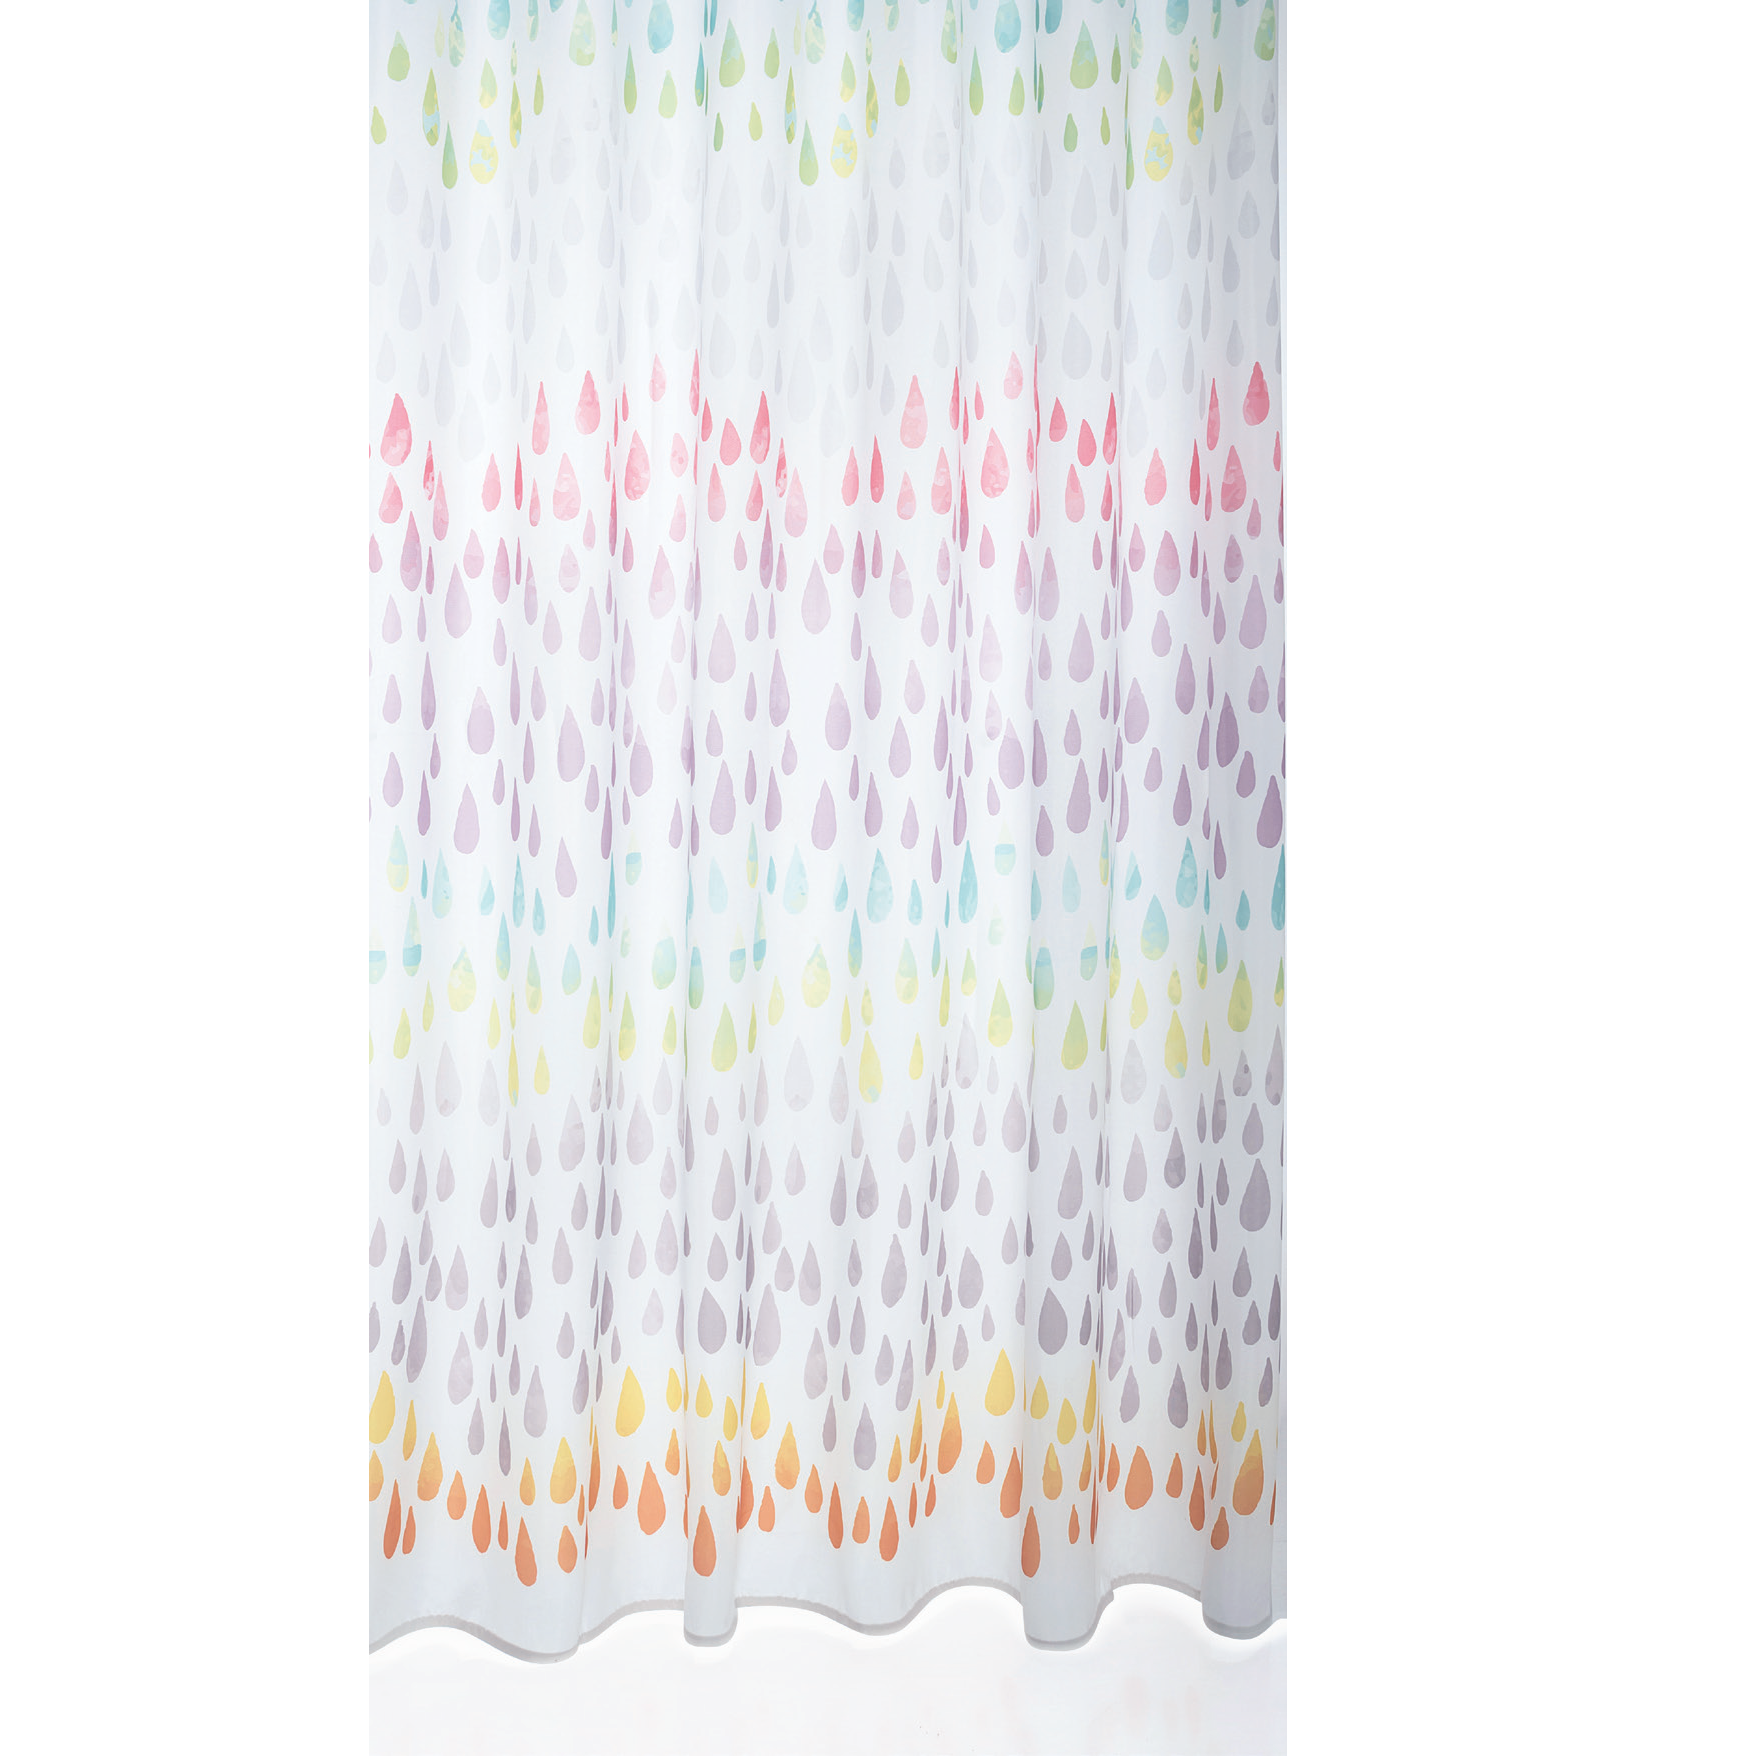 Water shower curtain